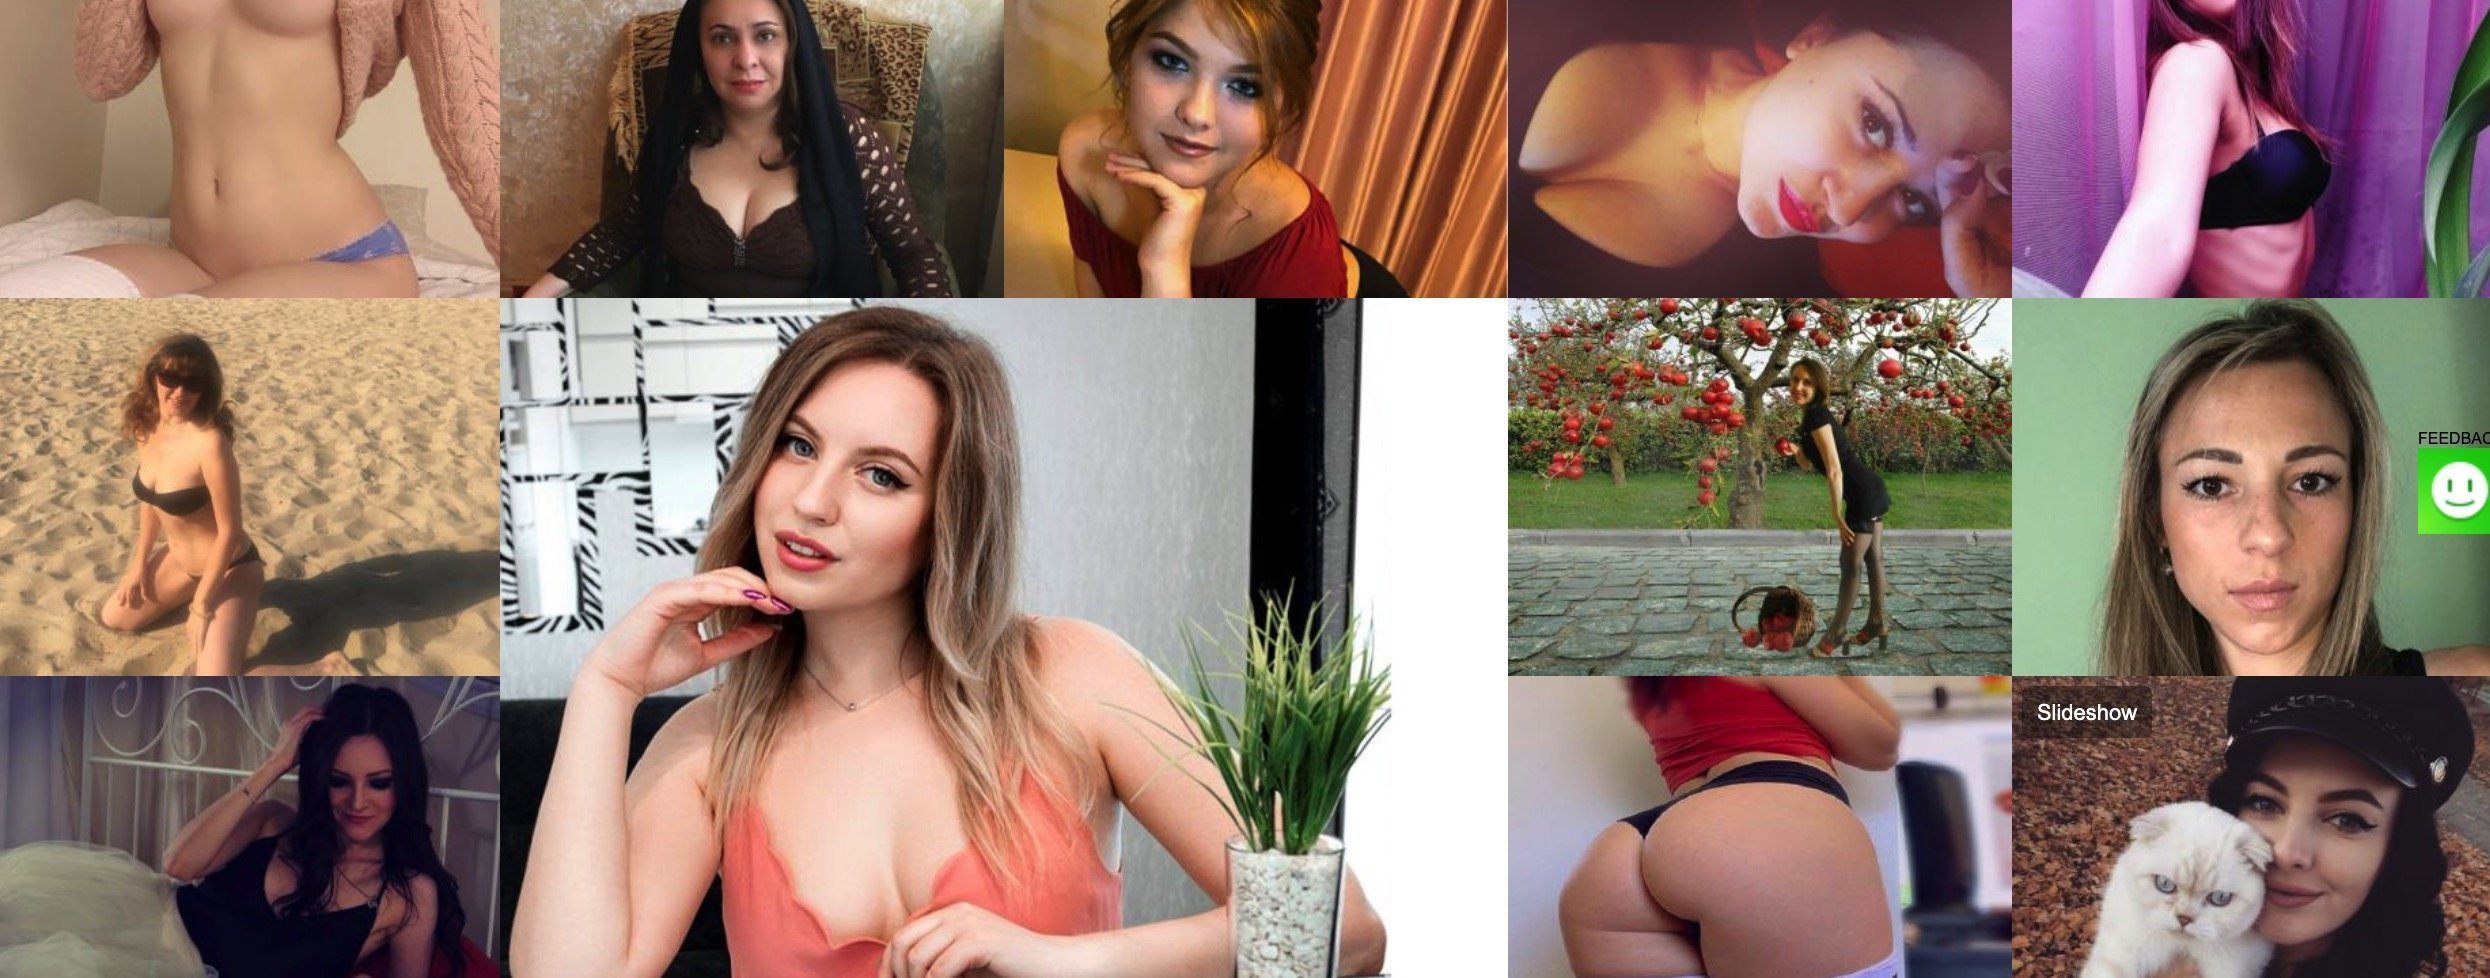 Girls on webcam nude